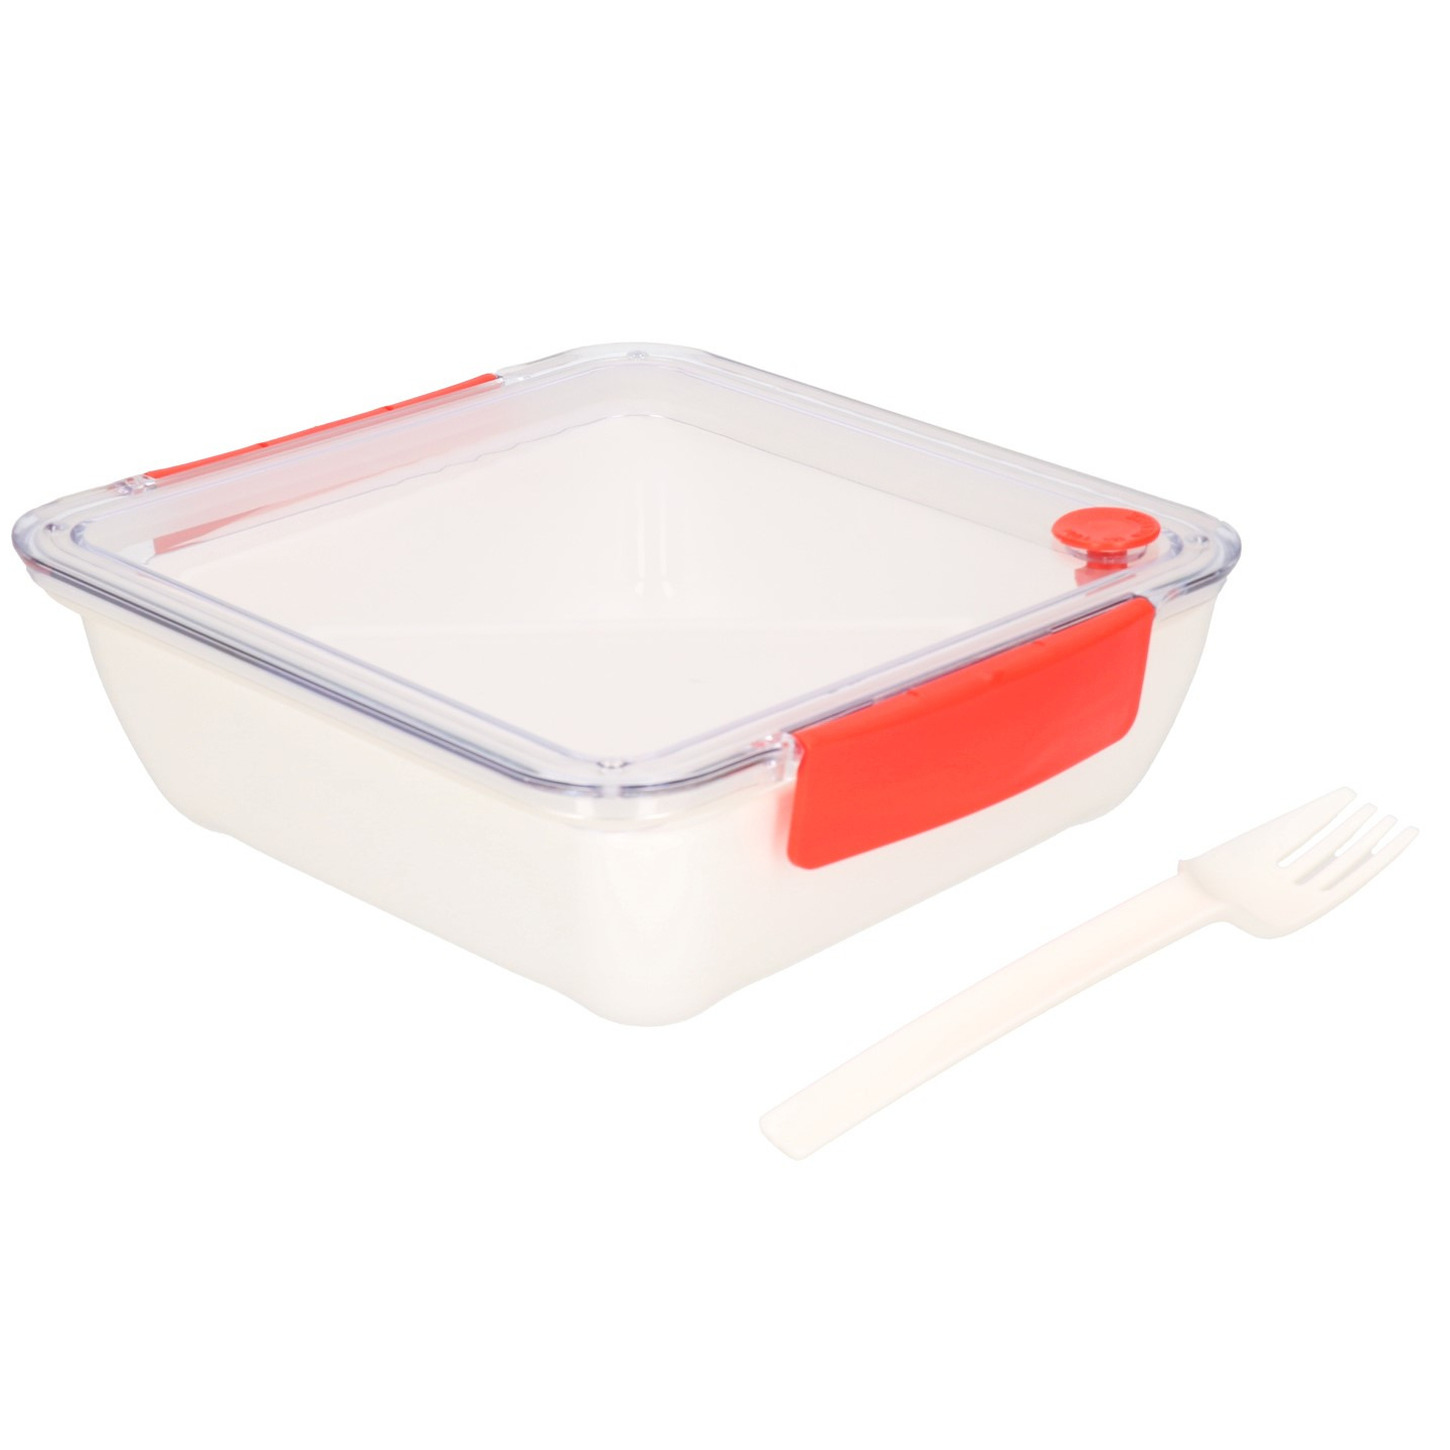 Transparant met rode lunchbox met luchttoevoerknop